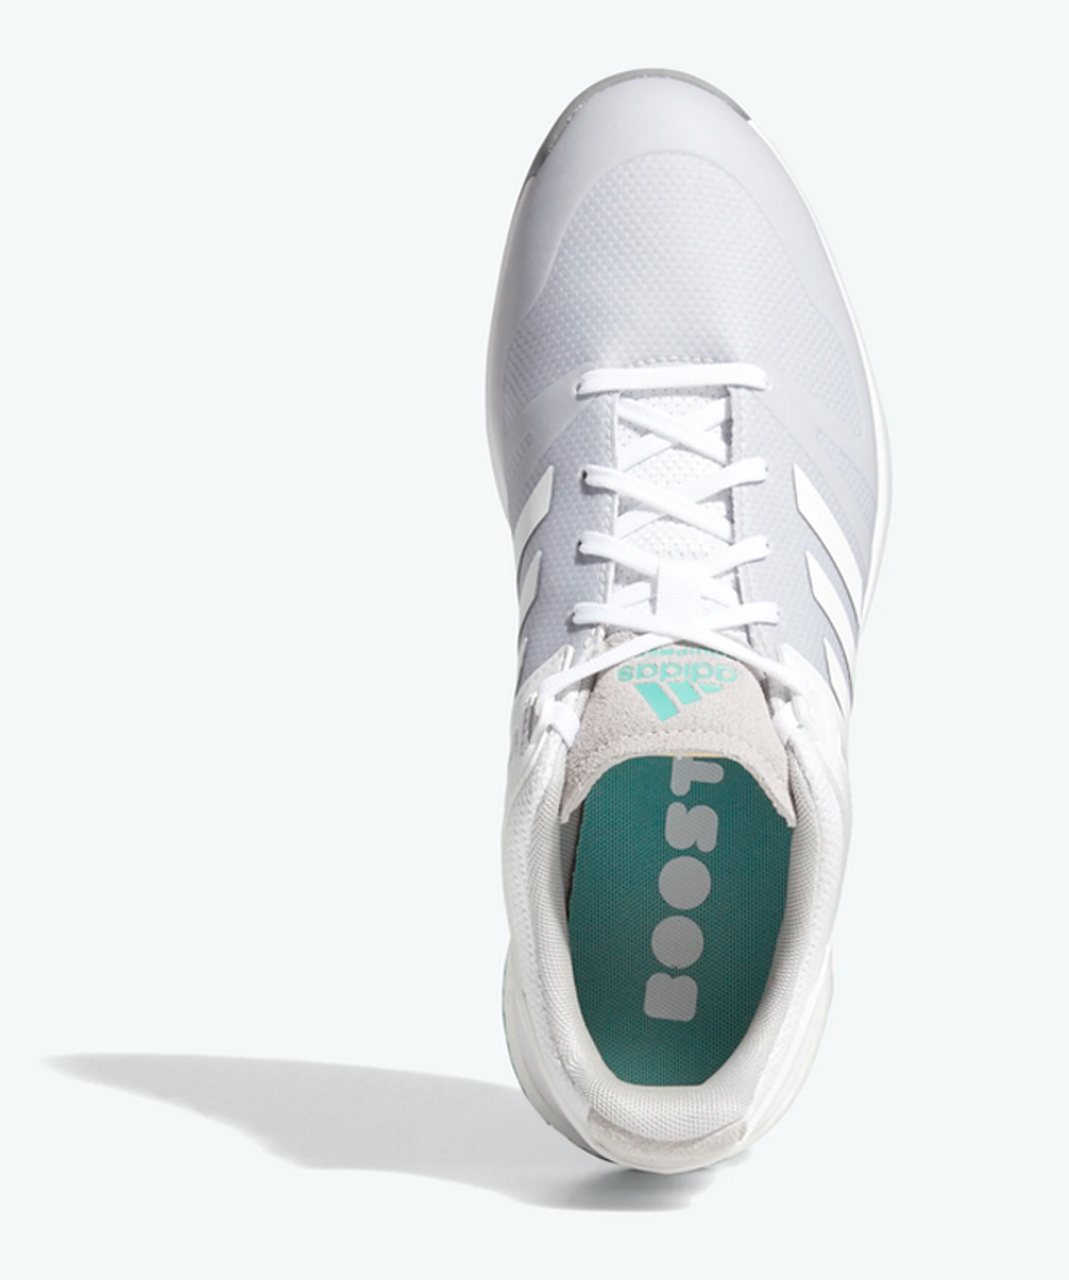 Adidas Women's EQT Spikeless Golf Shoes (White/Mint) FW6295